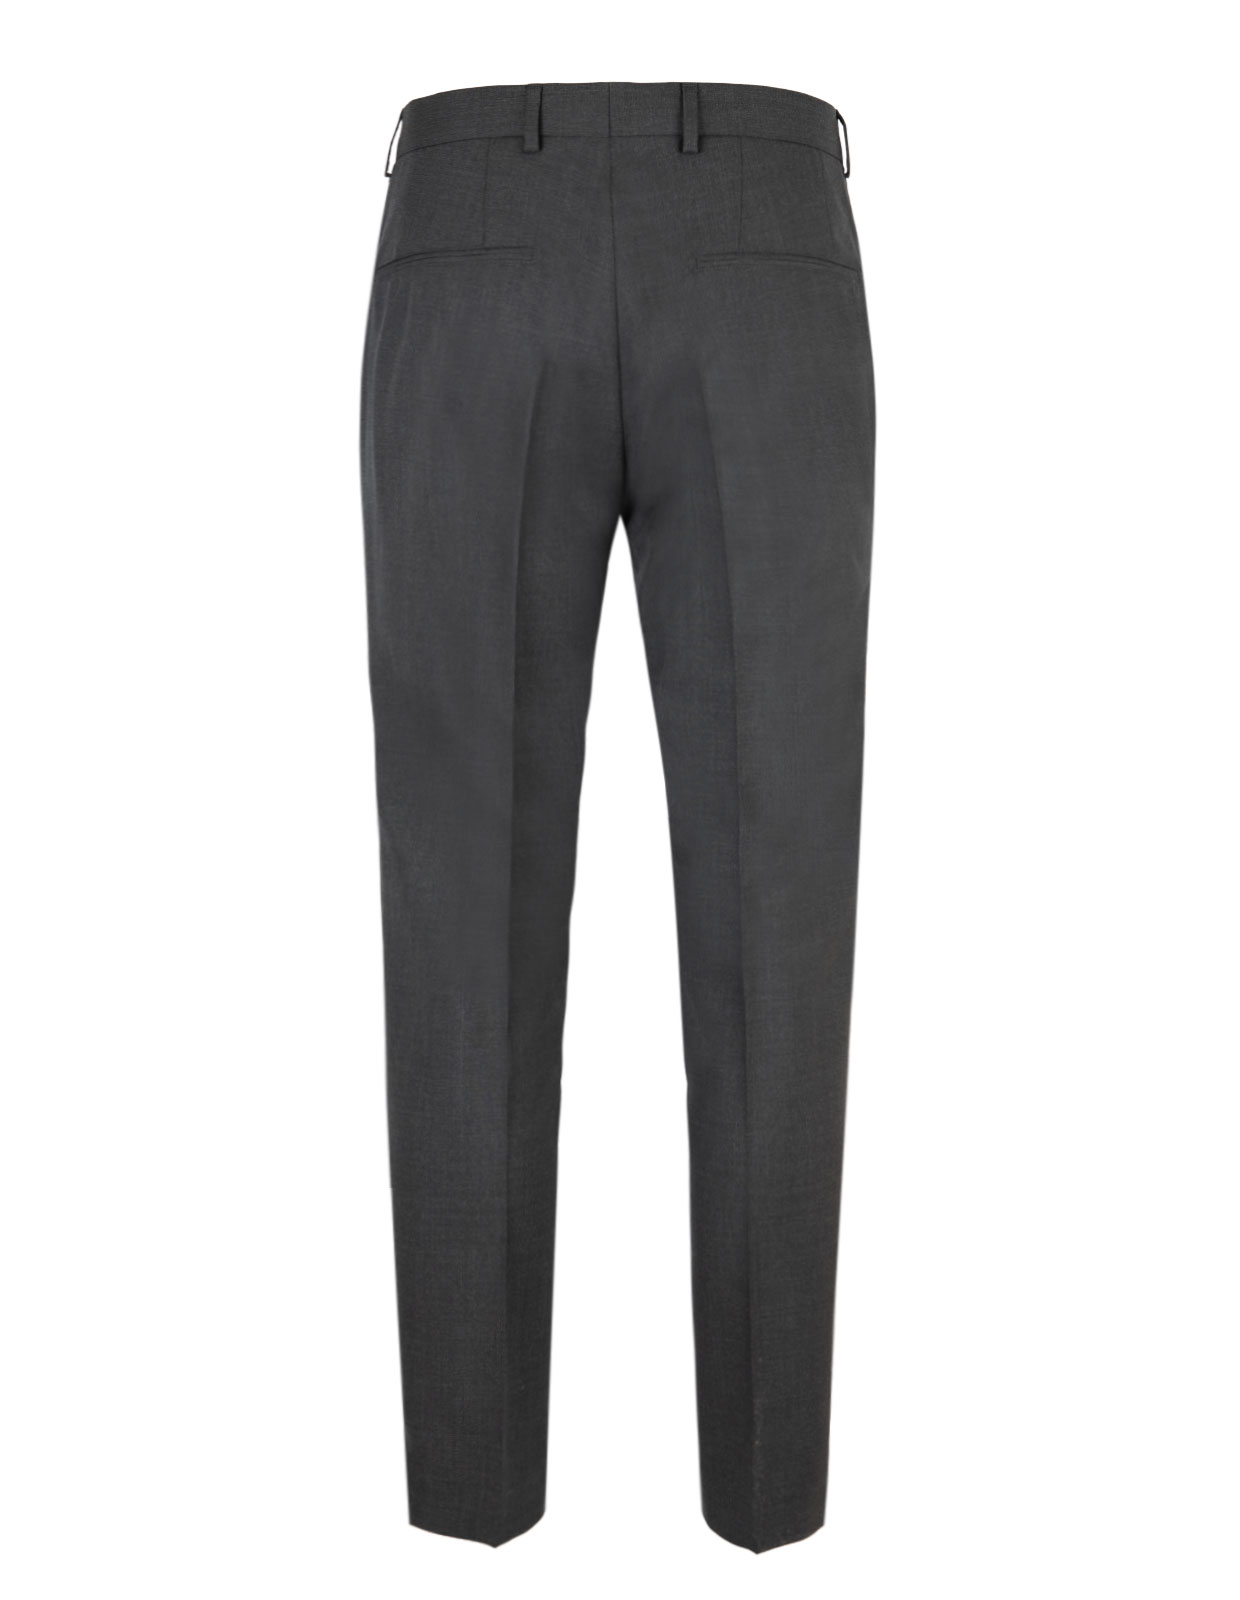 Damien Suit Trousers Slim Fit Mix & Match Wool Grey Stl 146